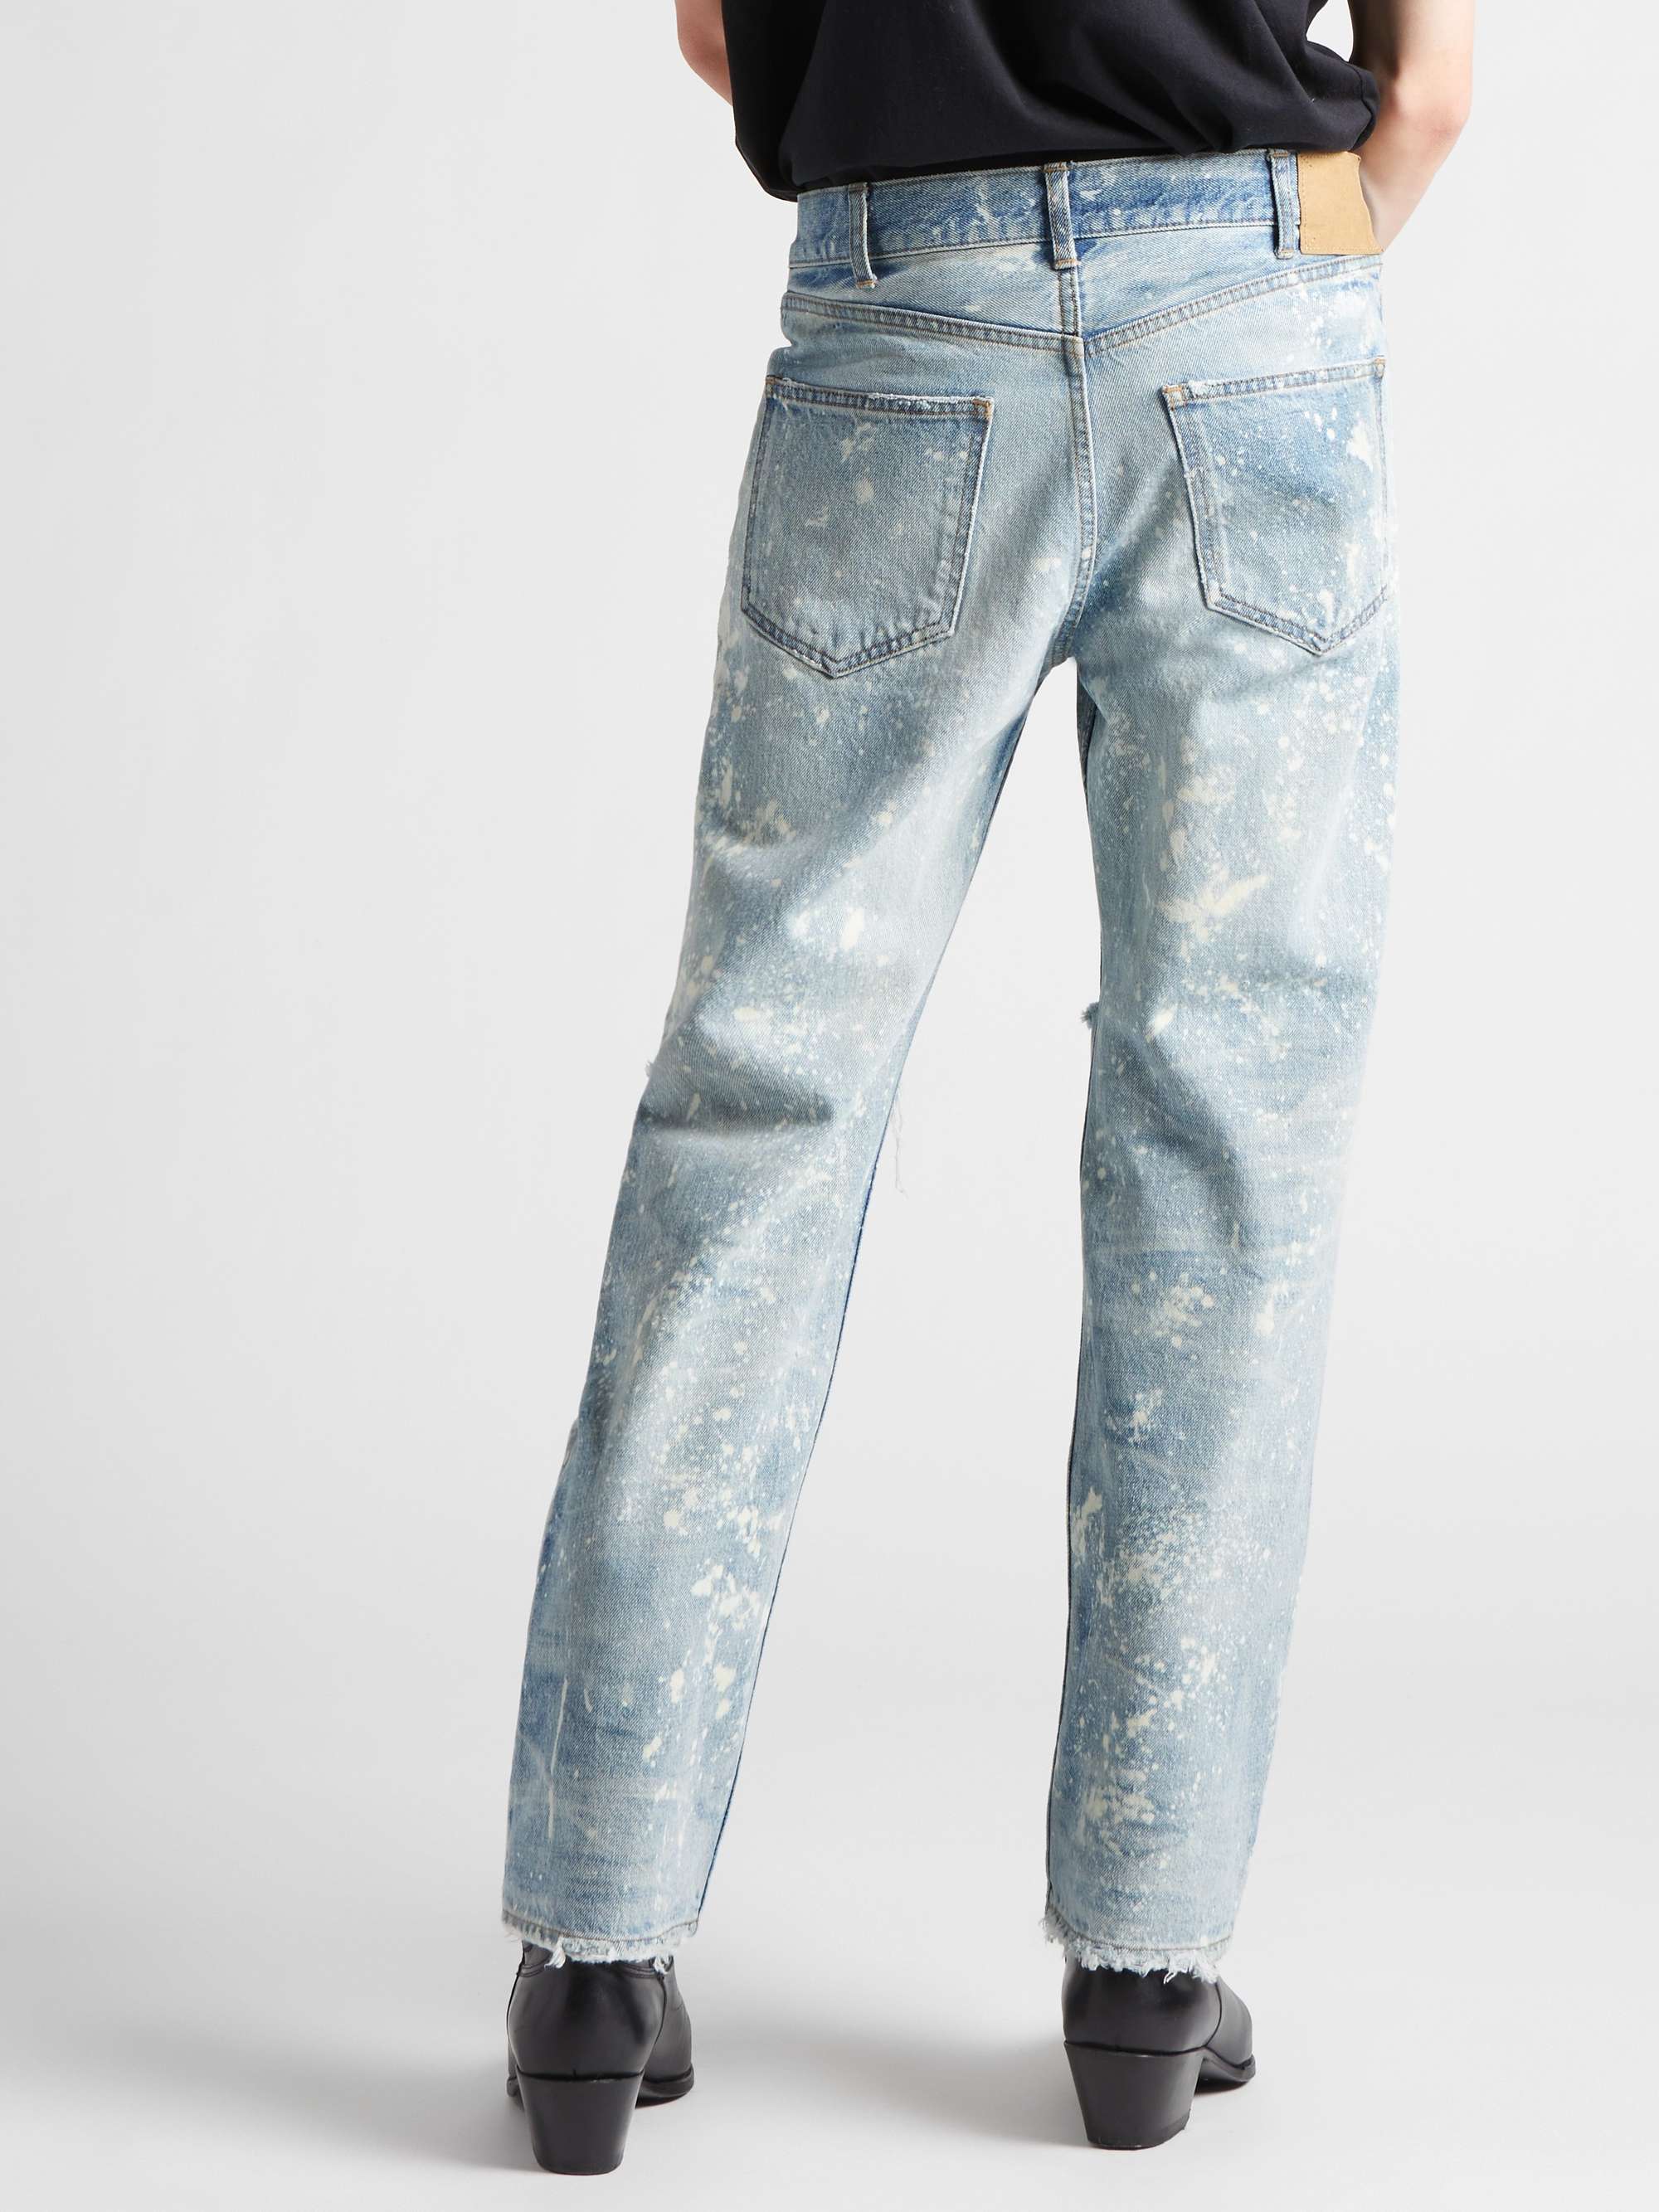 Kurt Distressed Bleached Jeans